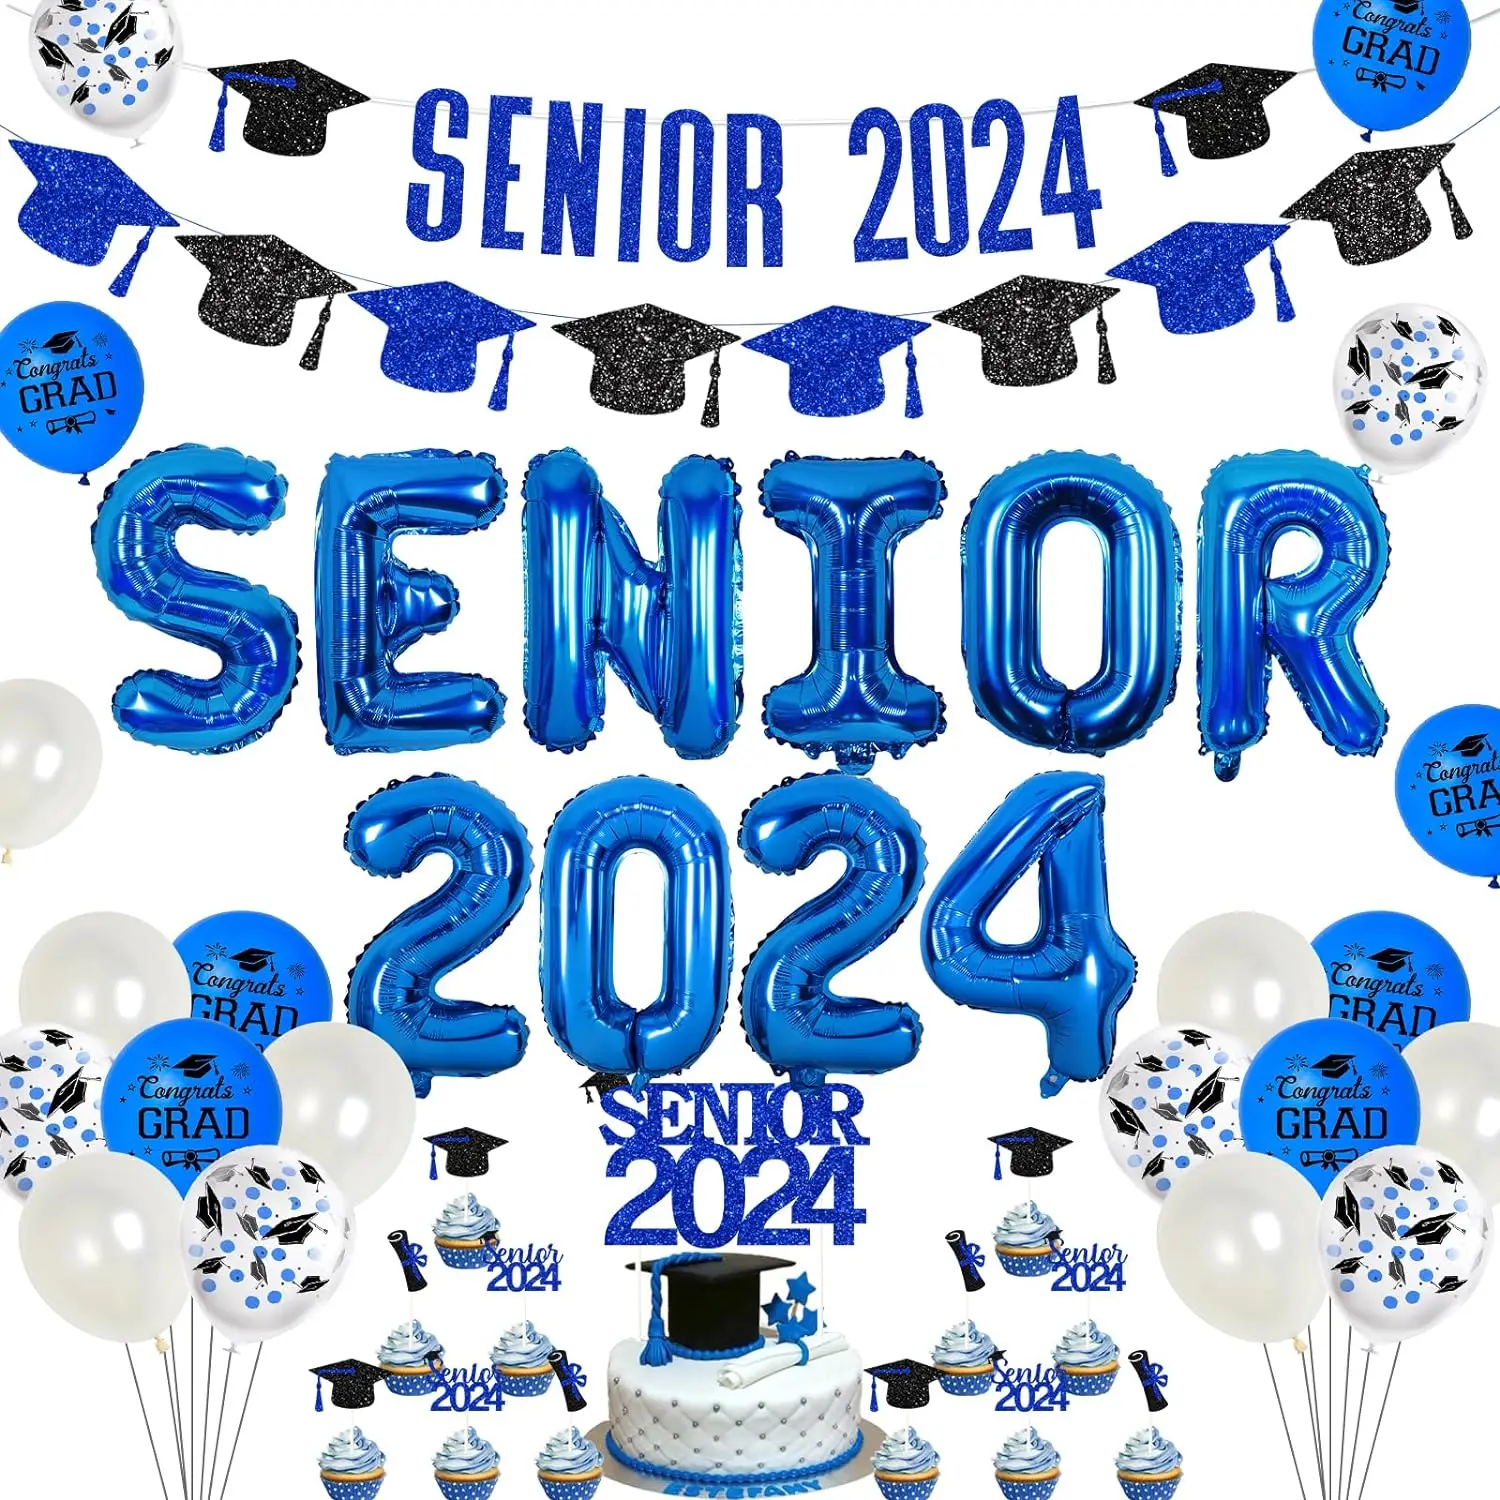 

Senior Graduation Decor 2024 High School College Congrats Grad Class of 2024 Party Supplies with Balloons Cake Topper